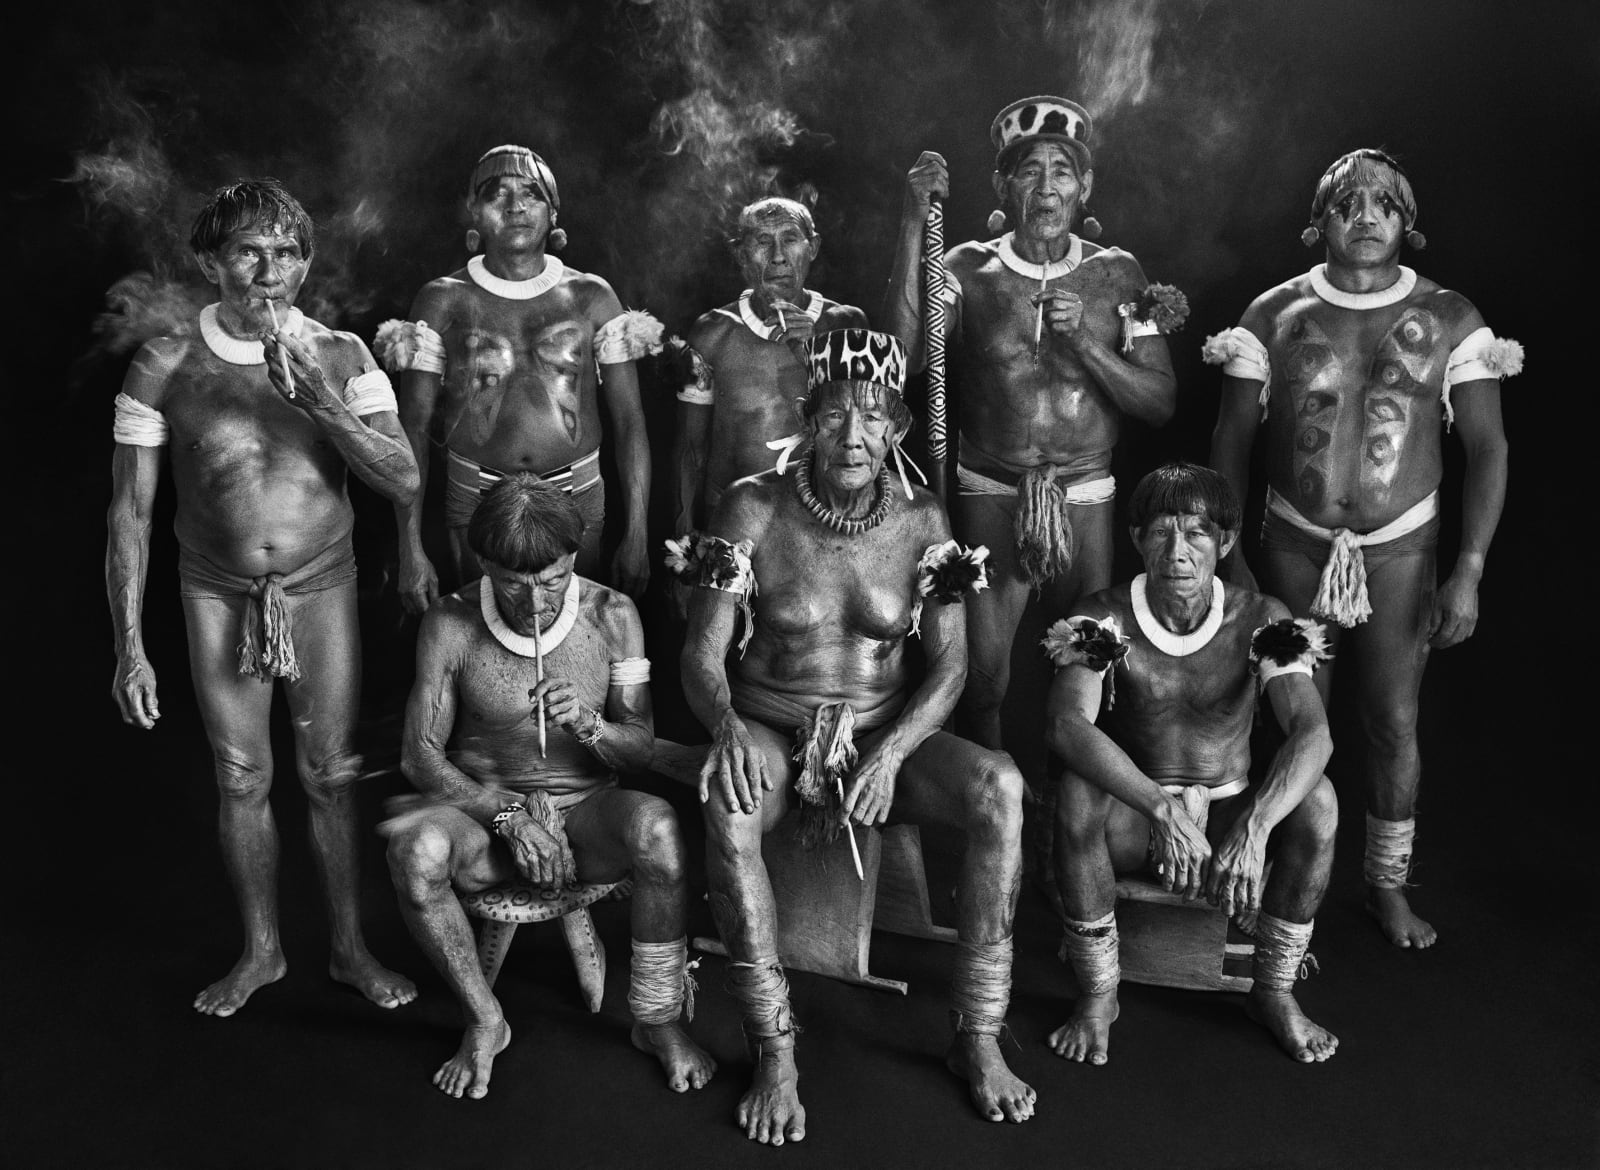 Sebastião Salgado, Kamayurá pajés (shamans). Xingu Indigenous Territory, State of Mato Grosso, Brazil, 2005